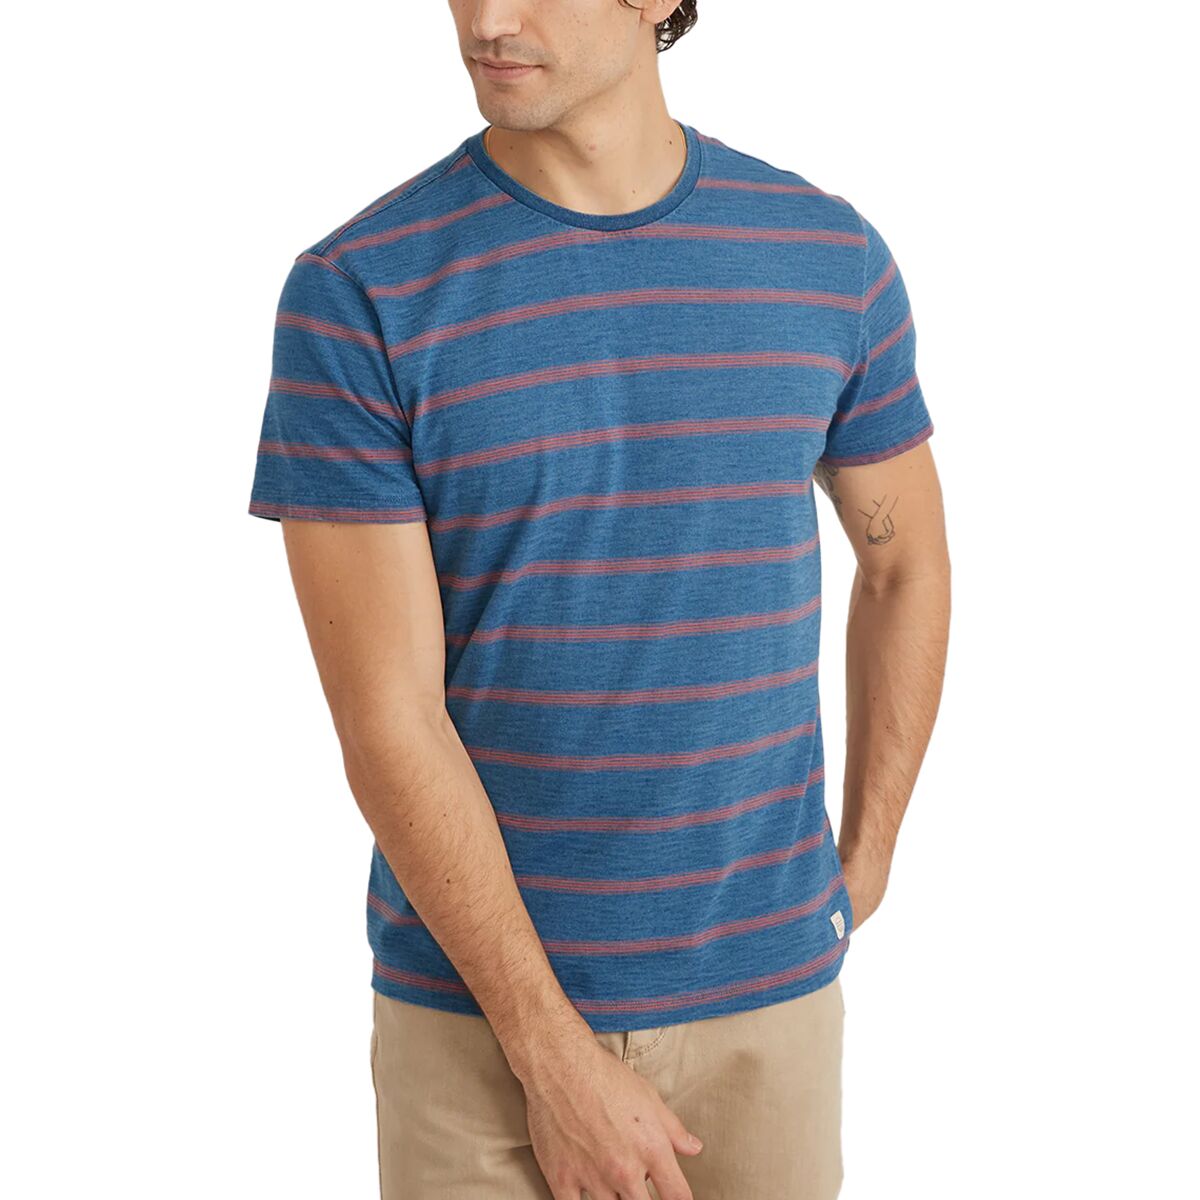 Marine Layer Indigo Stripe T-Shirt - Men's